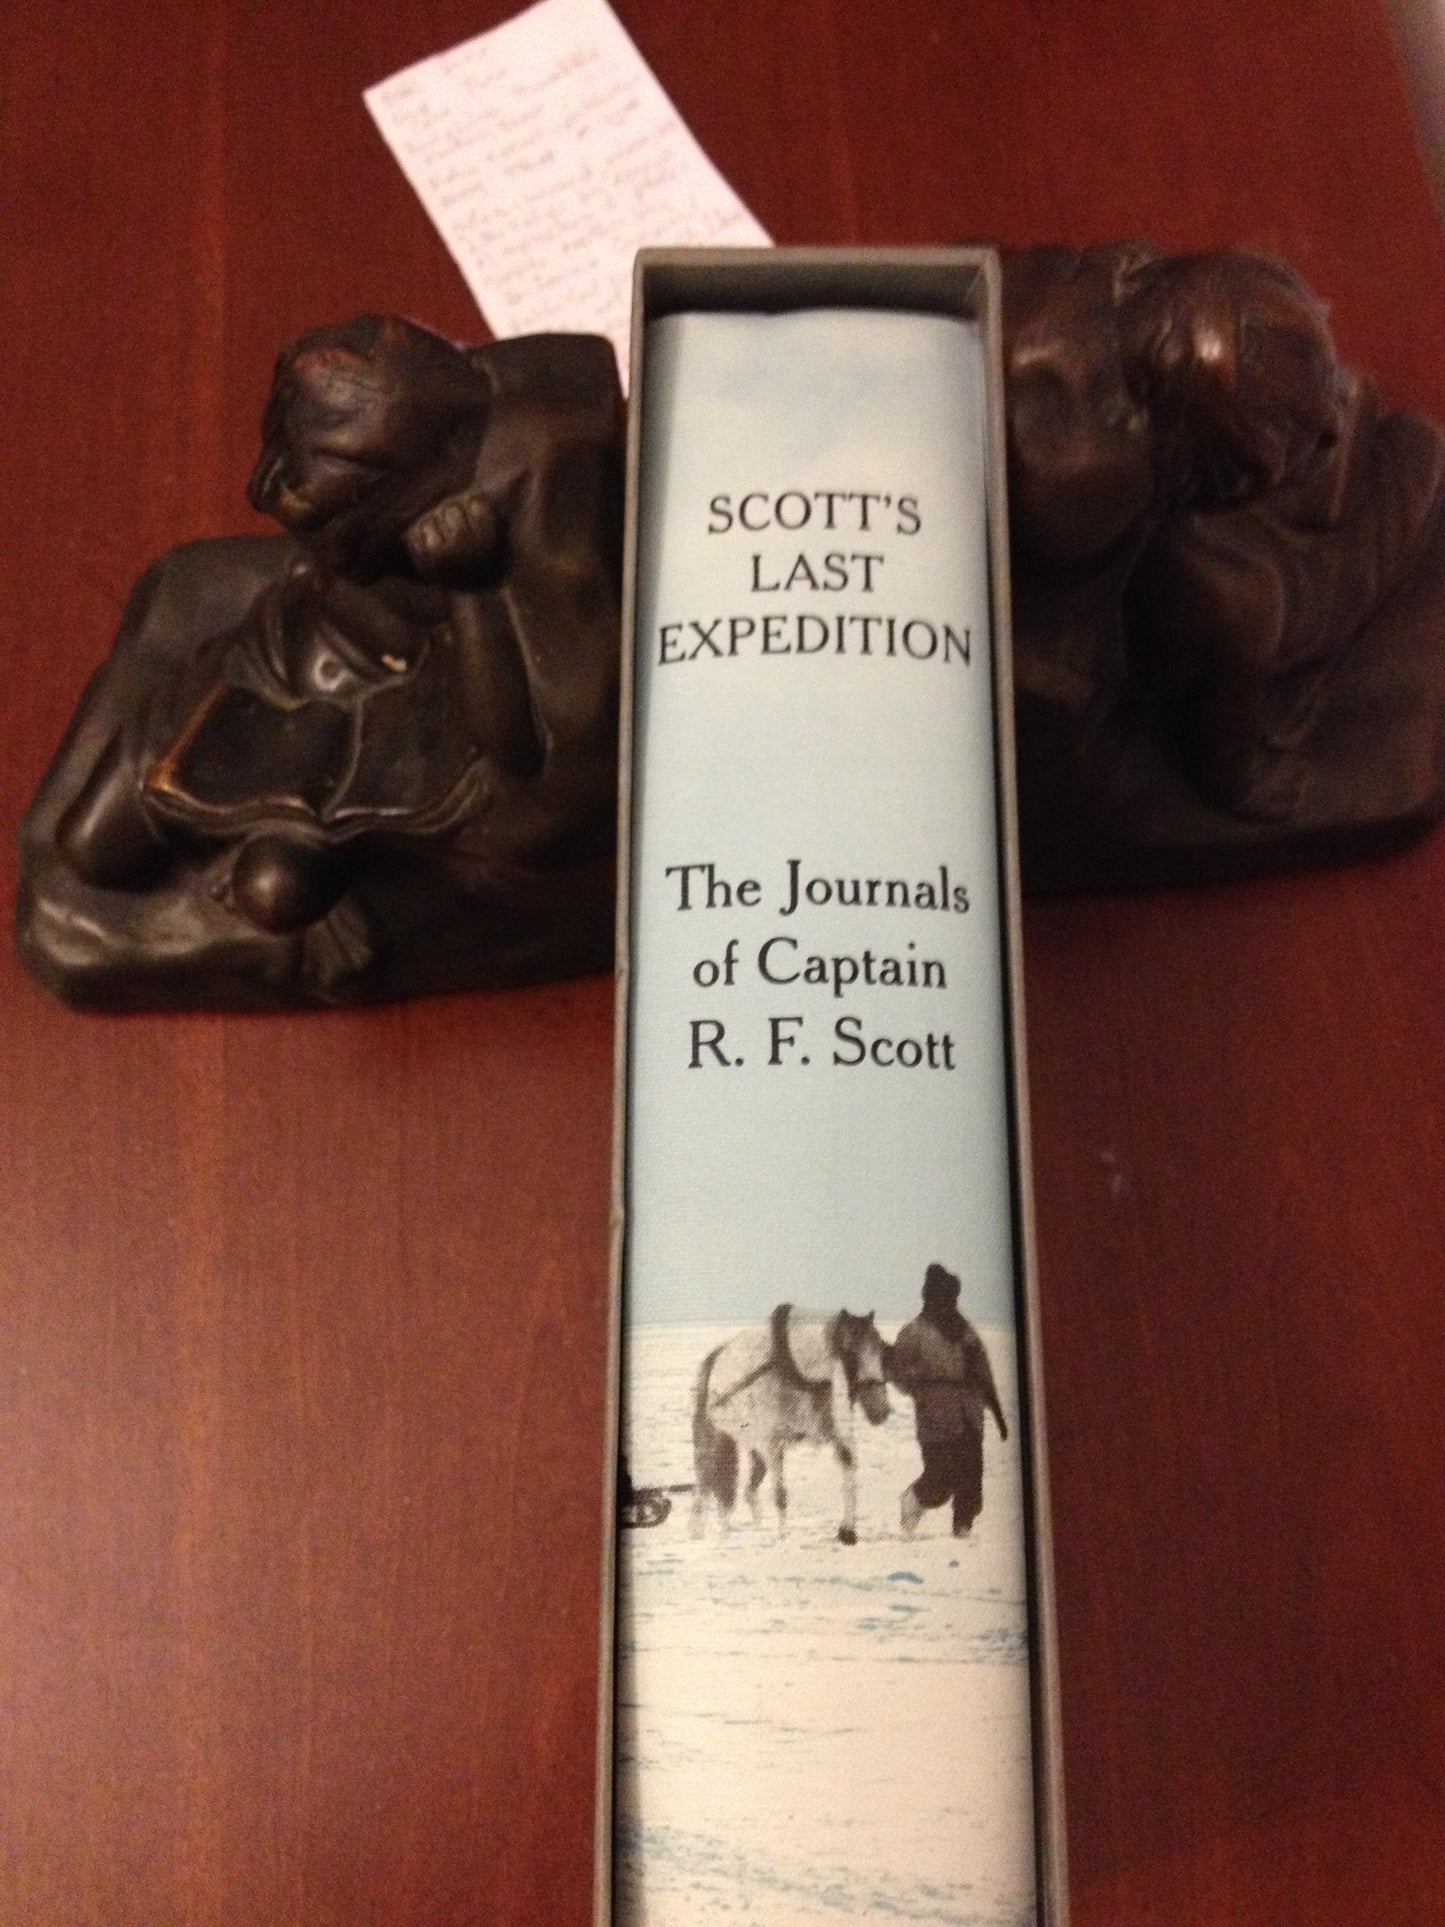 SCOTTS LAST EXPEDITION: THE JOURNALS OF R.F. SCOTT - ROBERT SCOTT